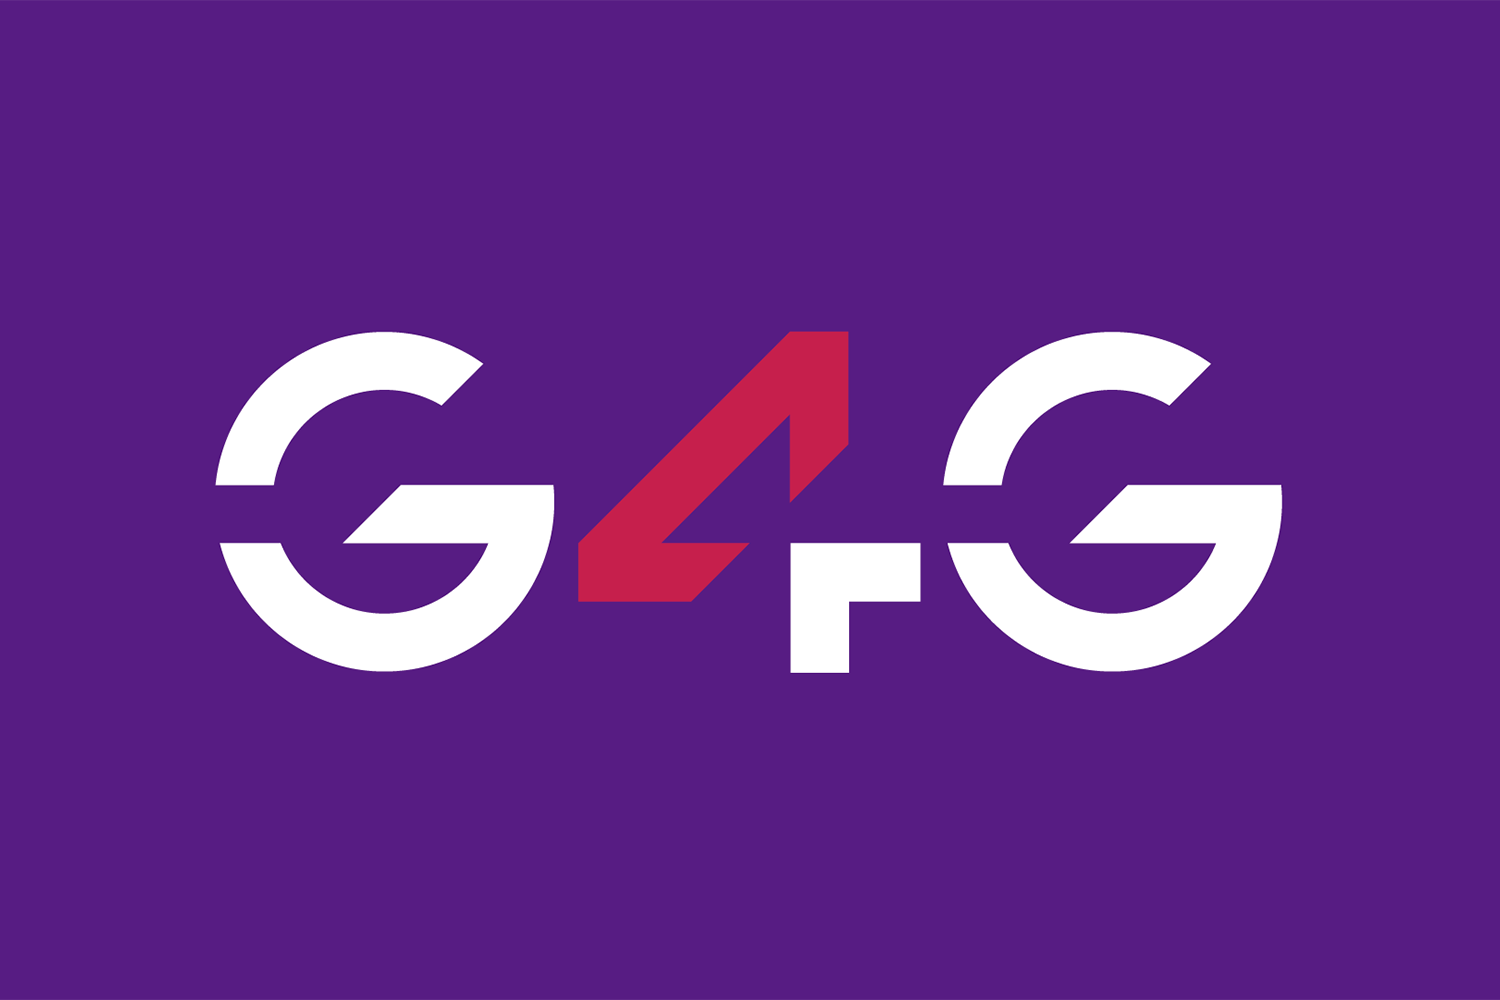 Game for Good（G4G）是一个探索游戏多元价值的跨界开放平台，以“游戏+”为核心理念，以游戏化技术和机制帮助跨行业伙伴实现数字化转型，提供社会议题的创新解决方案，并为具备社会价值的游戏及游戏化产品提供资源链接、能力建设、资金扶持、合作渠道及传播等方面的支持，阐扬游戏的正向价值，为推动科技与人类社会的融合发展做出积极的贡献。